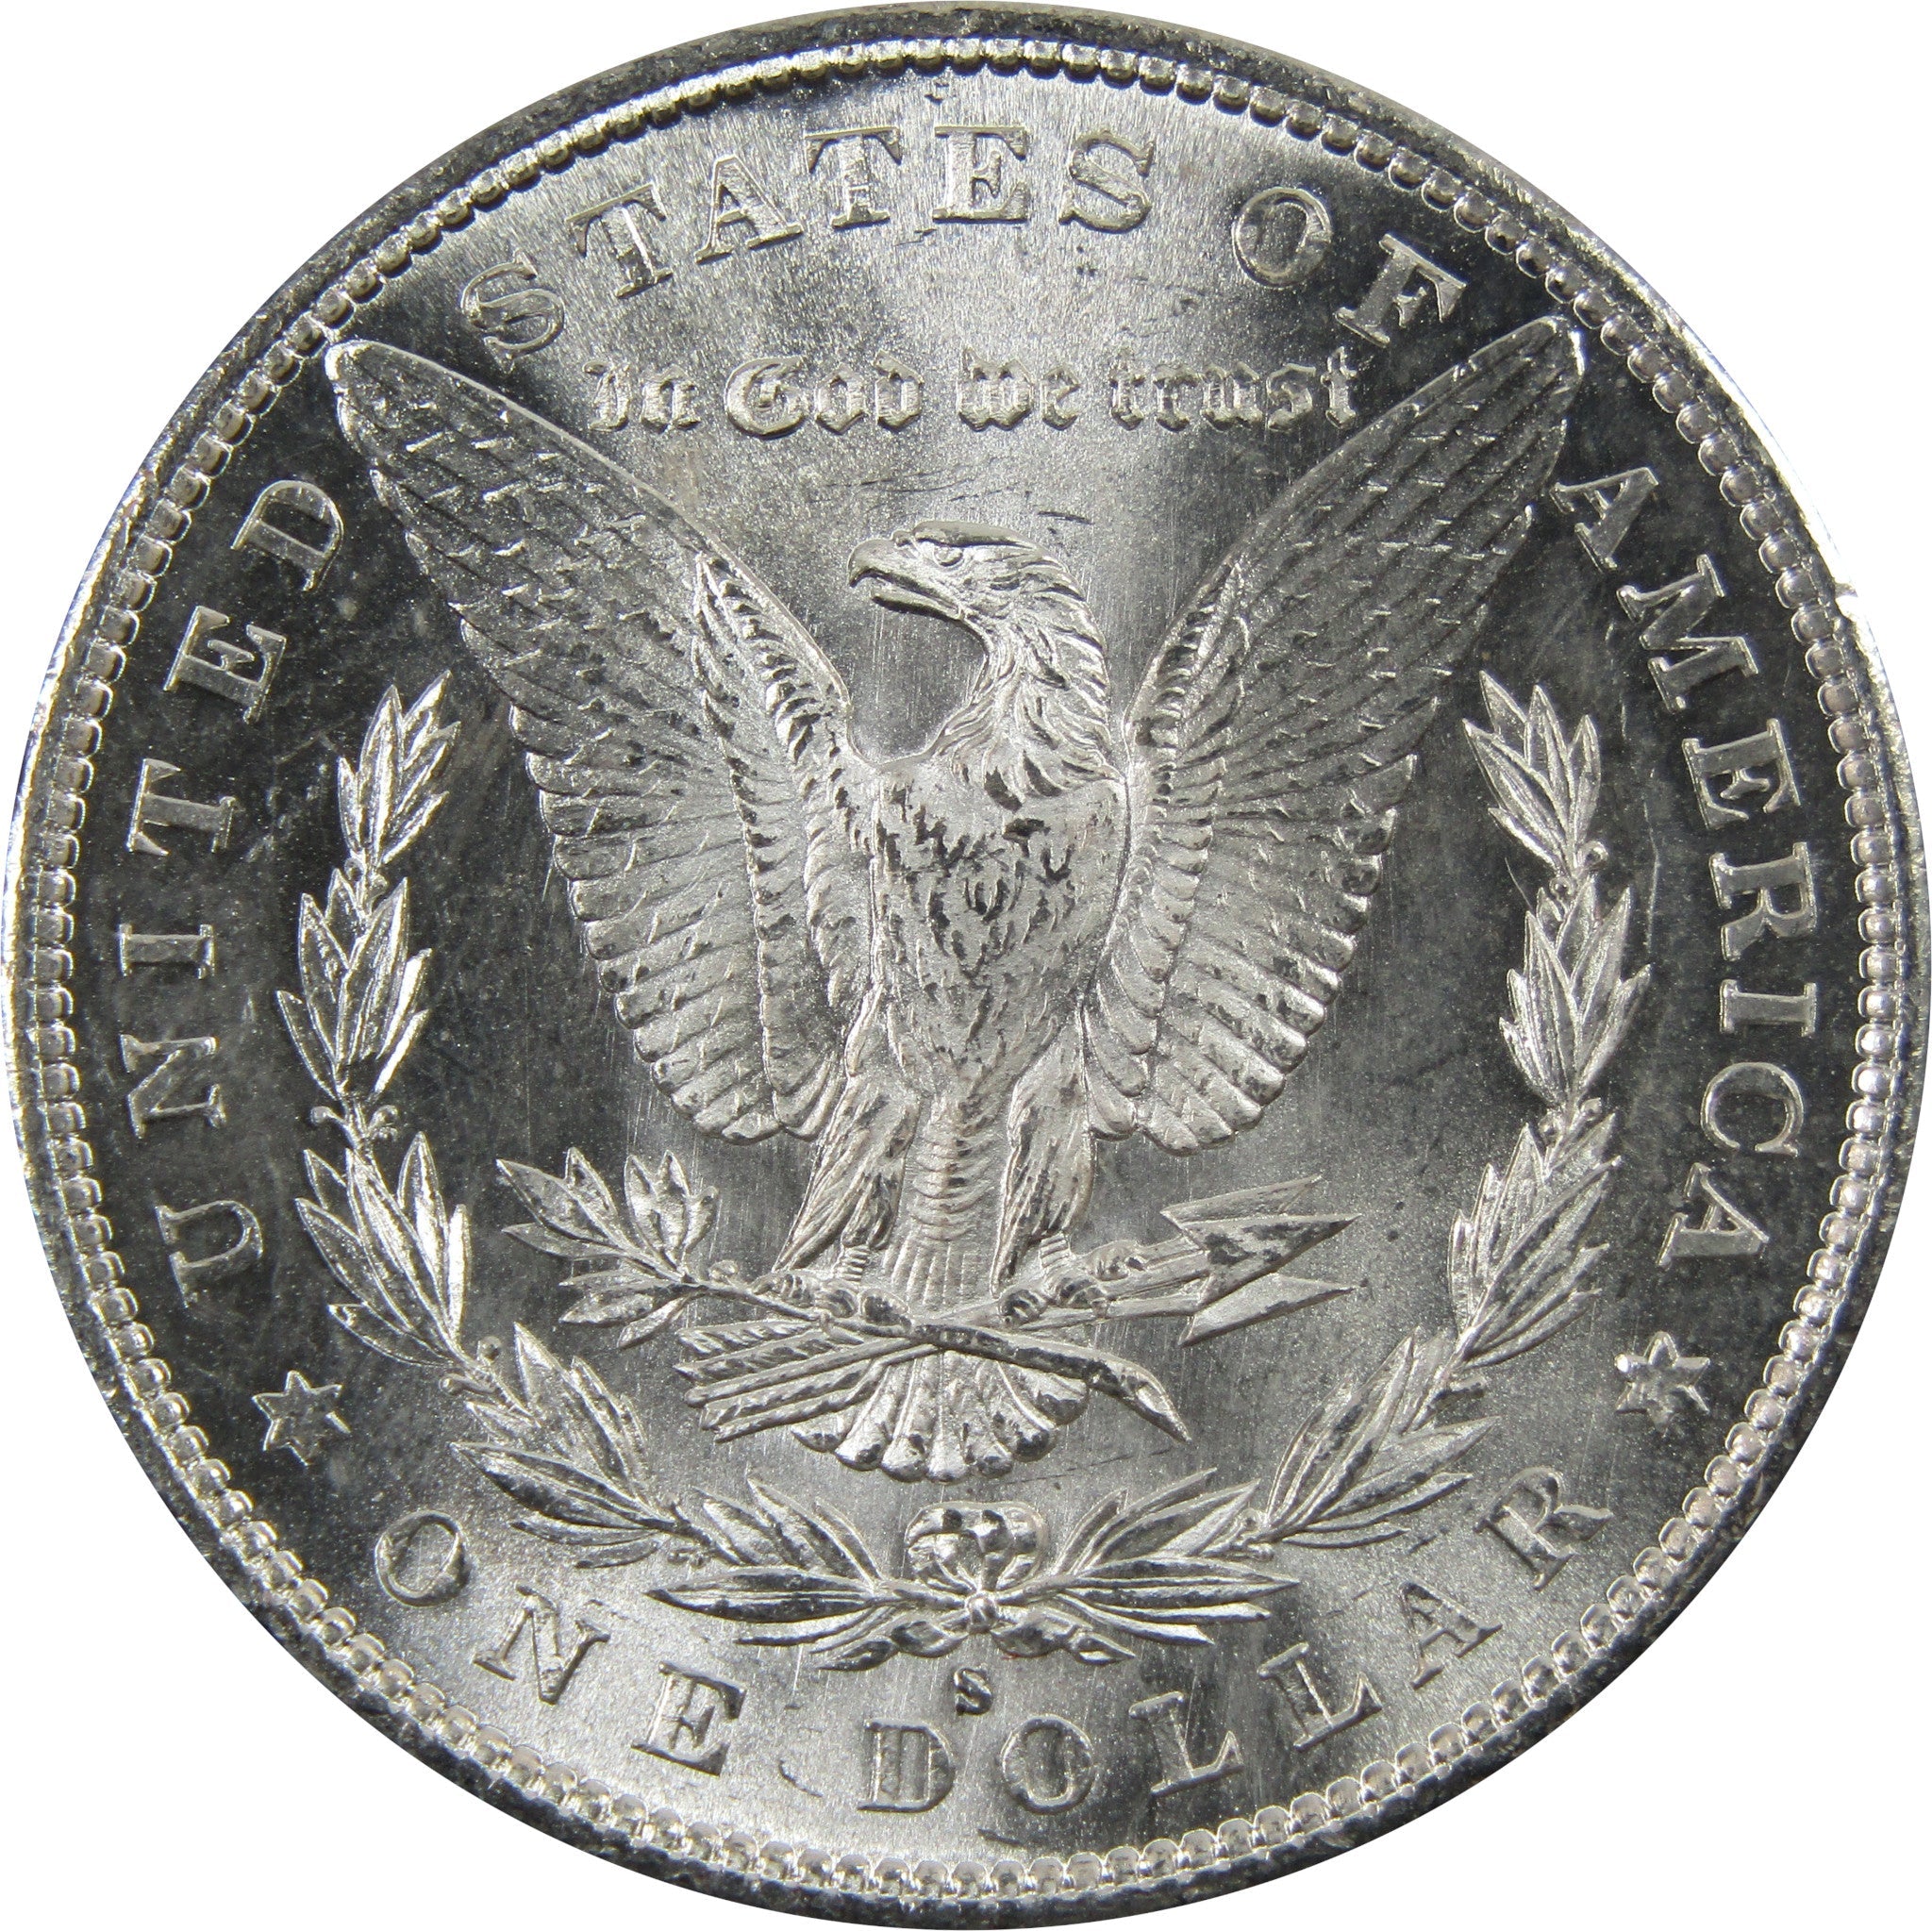 1880 S Morgan Dollar BU Uncirculated 90% Silver $1 Coin SKU:I5440 - Morgan coin - Morgan silver dollar - Morgan silver dollar for sale - Profile Coins &amp; Collectibles